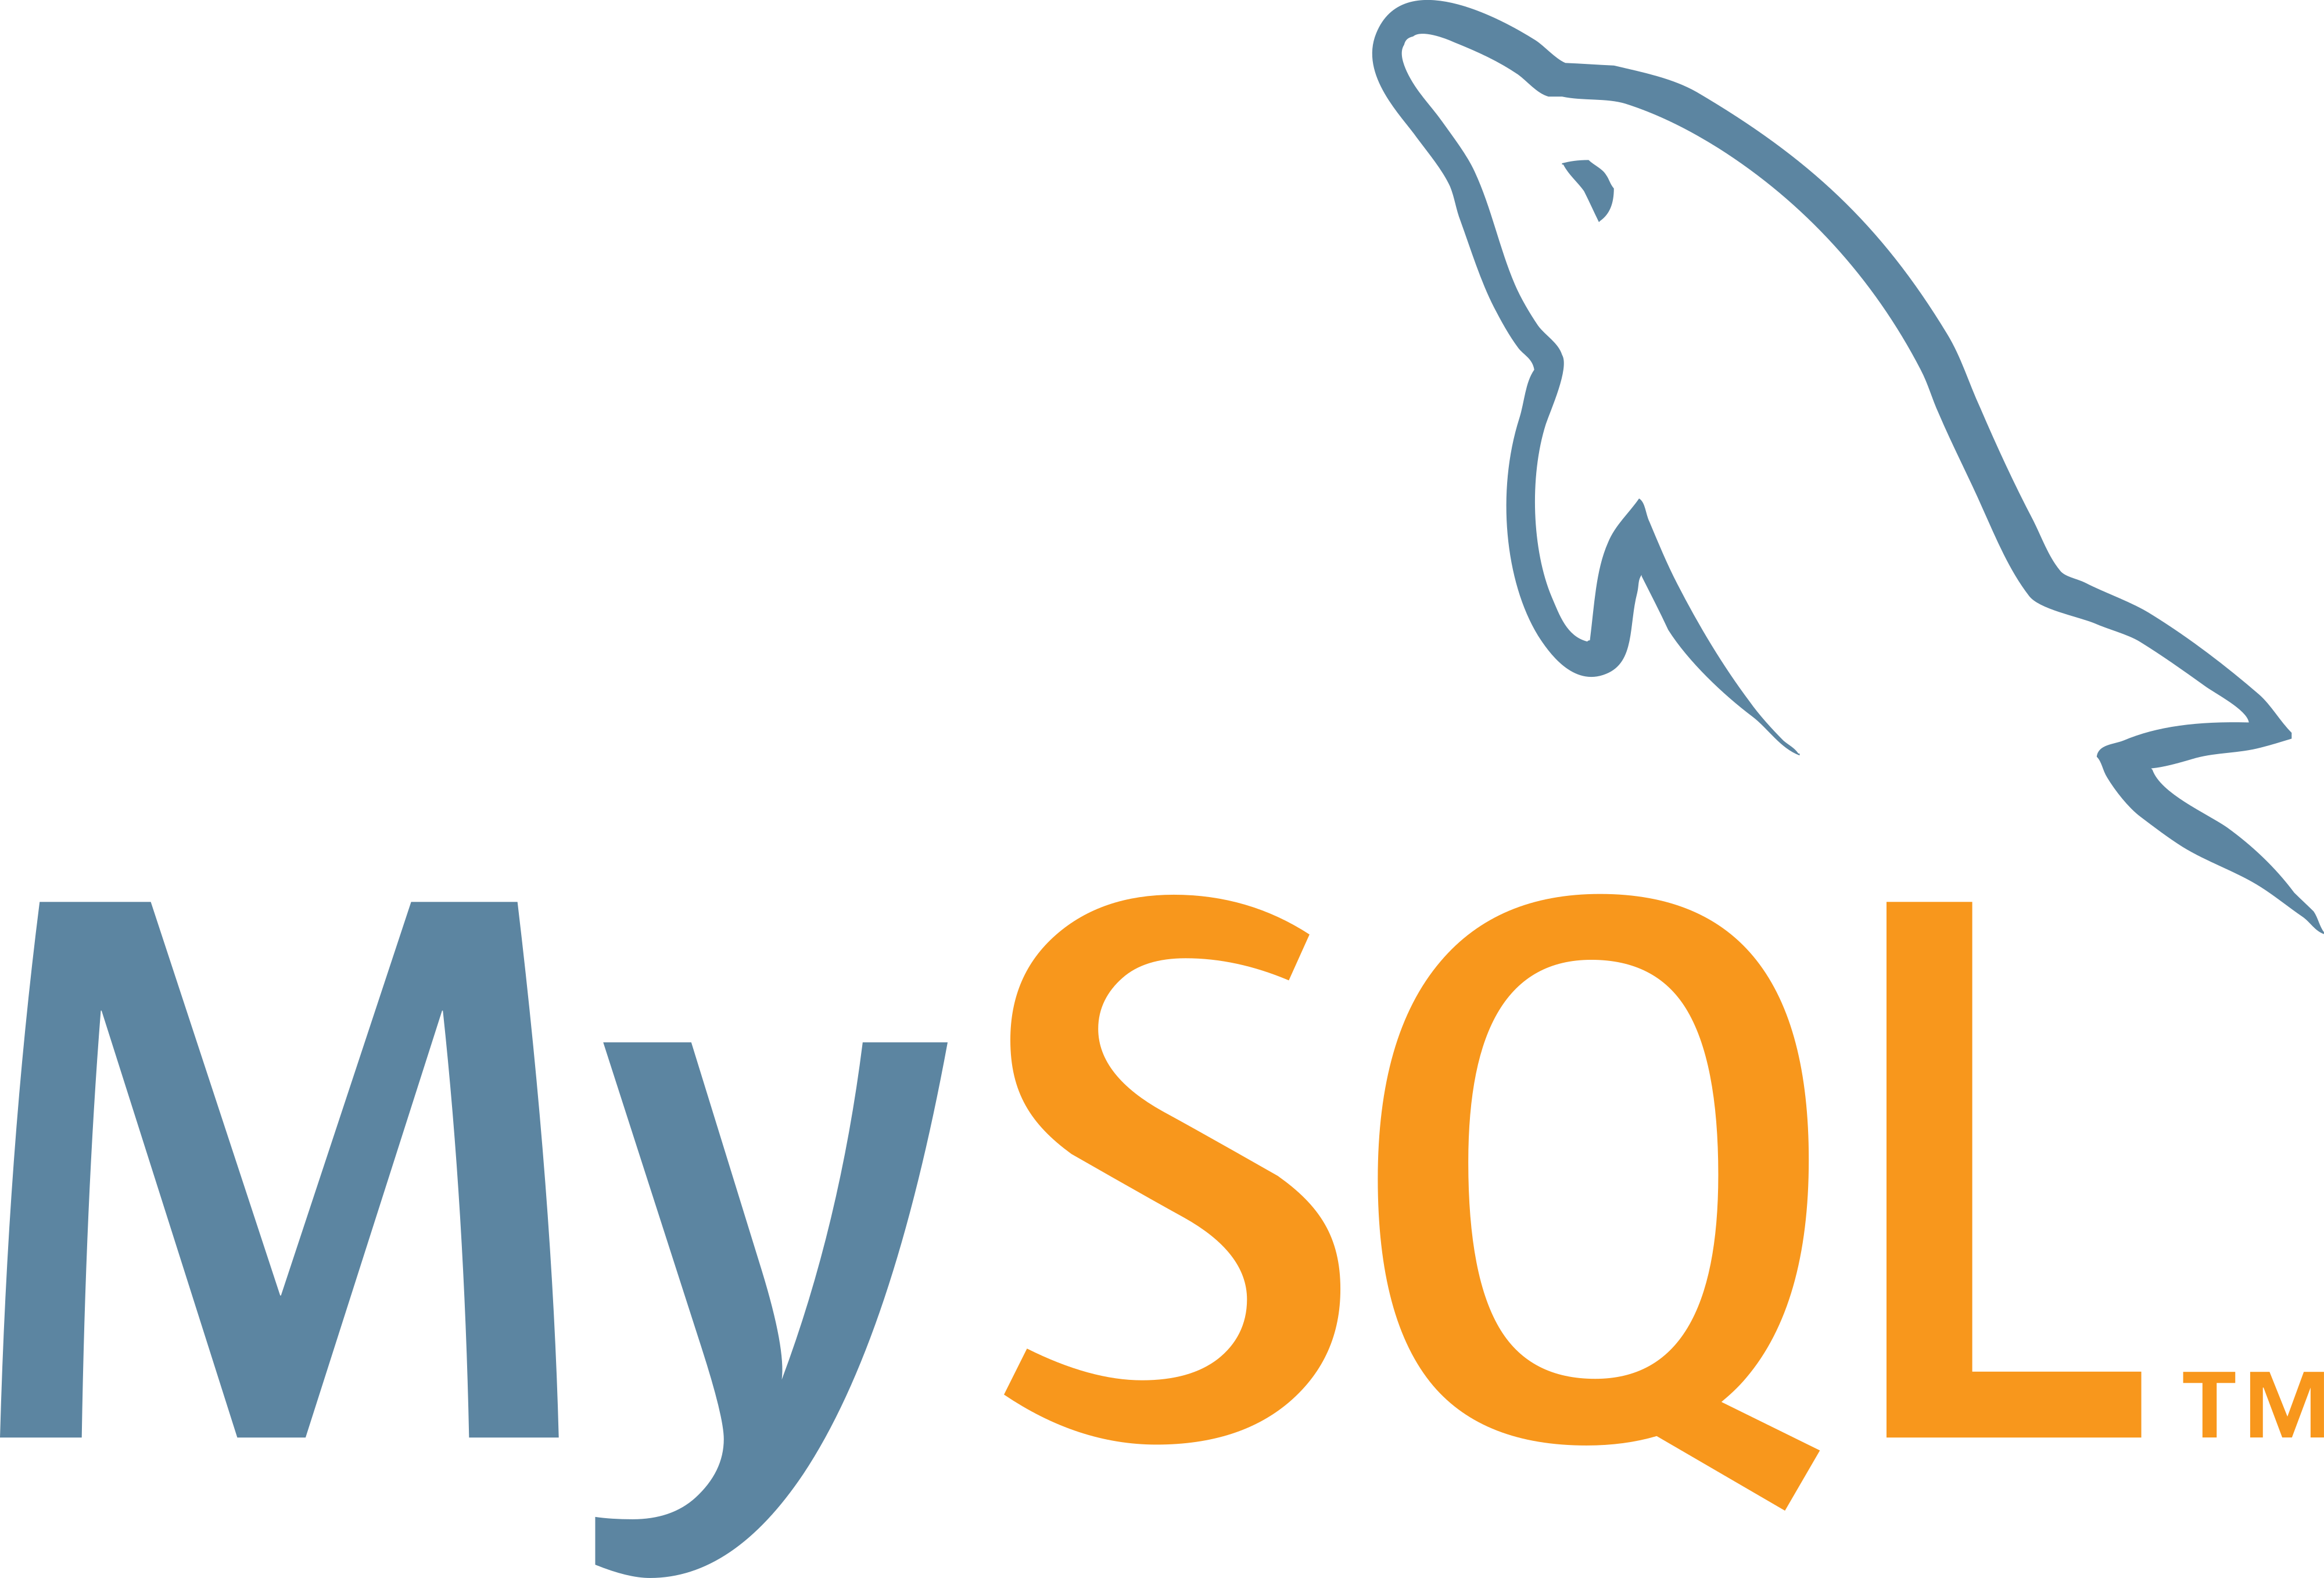 Mysql2. MYSQL. MYSQL logo. MYSQL логотип PNG. MYSQL логотип без фона.